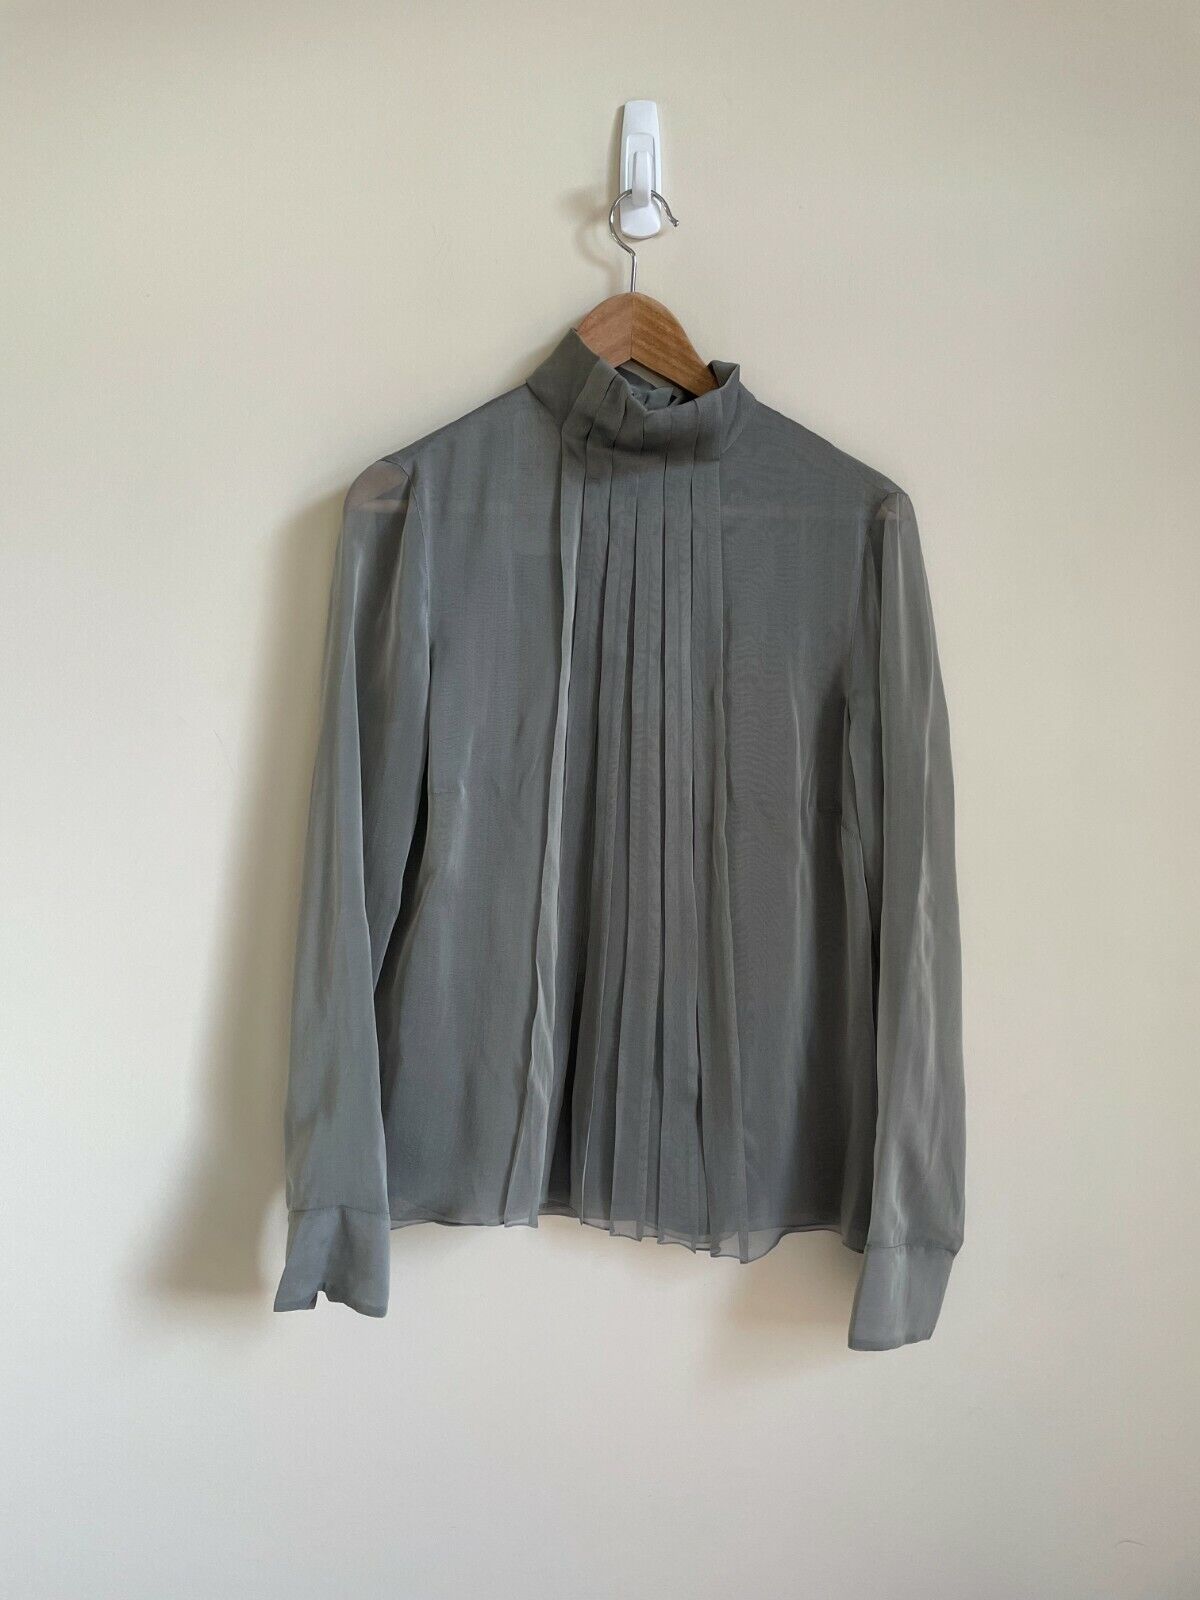 New AKRIS Women\'s Medium Gray Silk Blouse Size 10 Sheer Shirt Top NWT